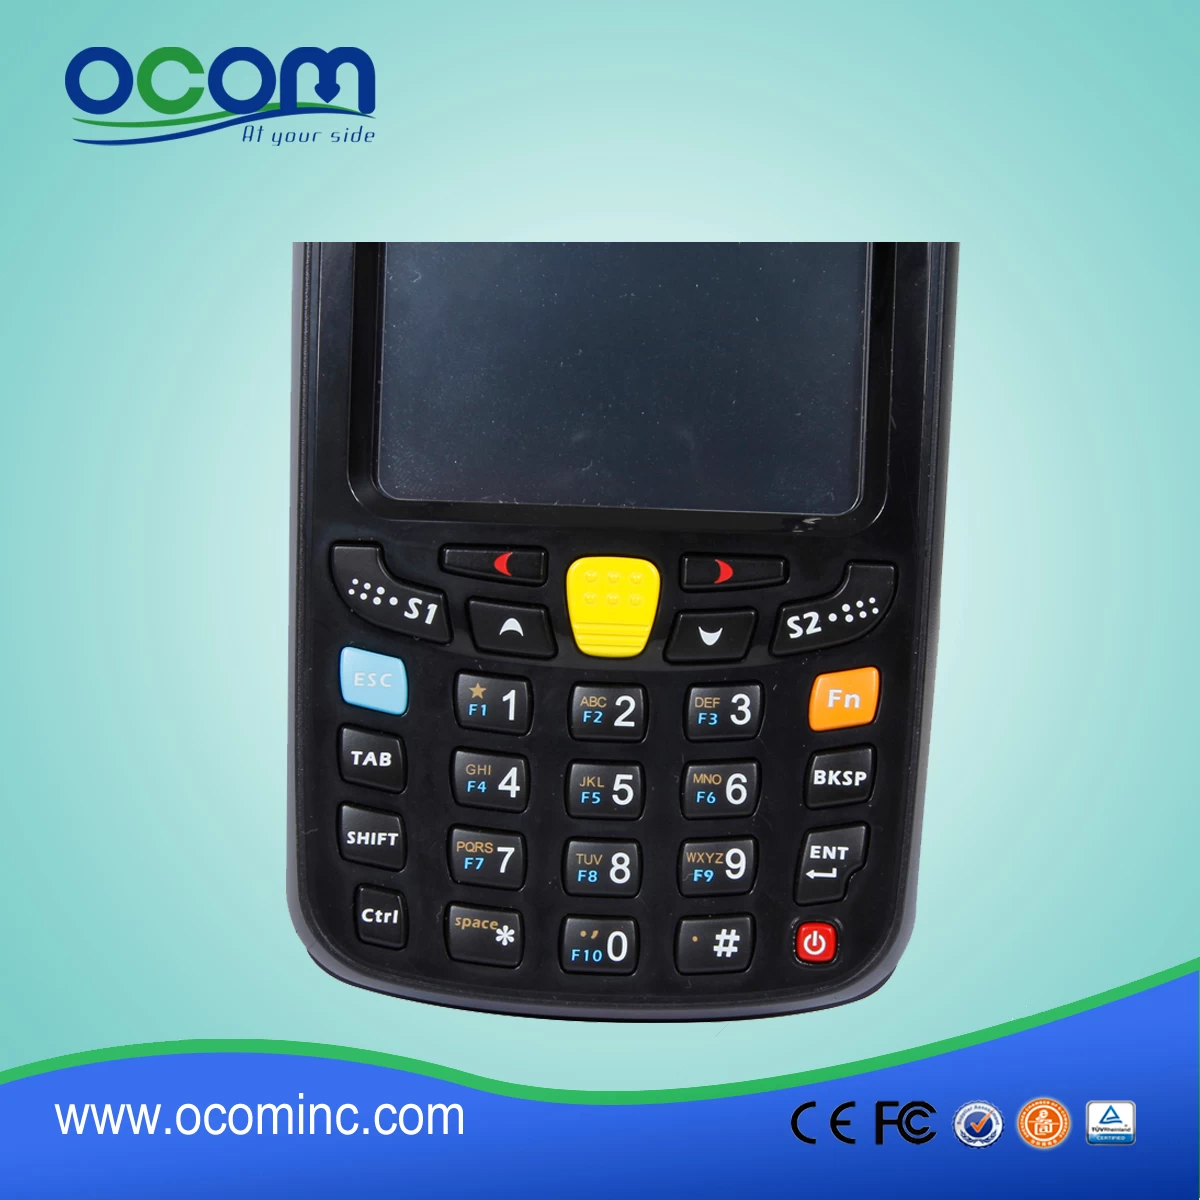 Multi-functional handheld Industrial PDA --OCBS-D008